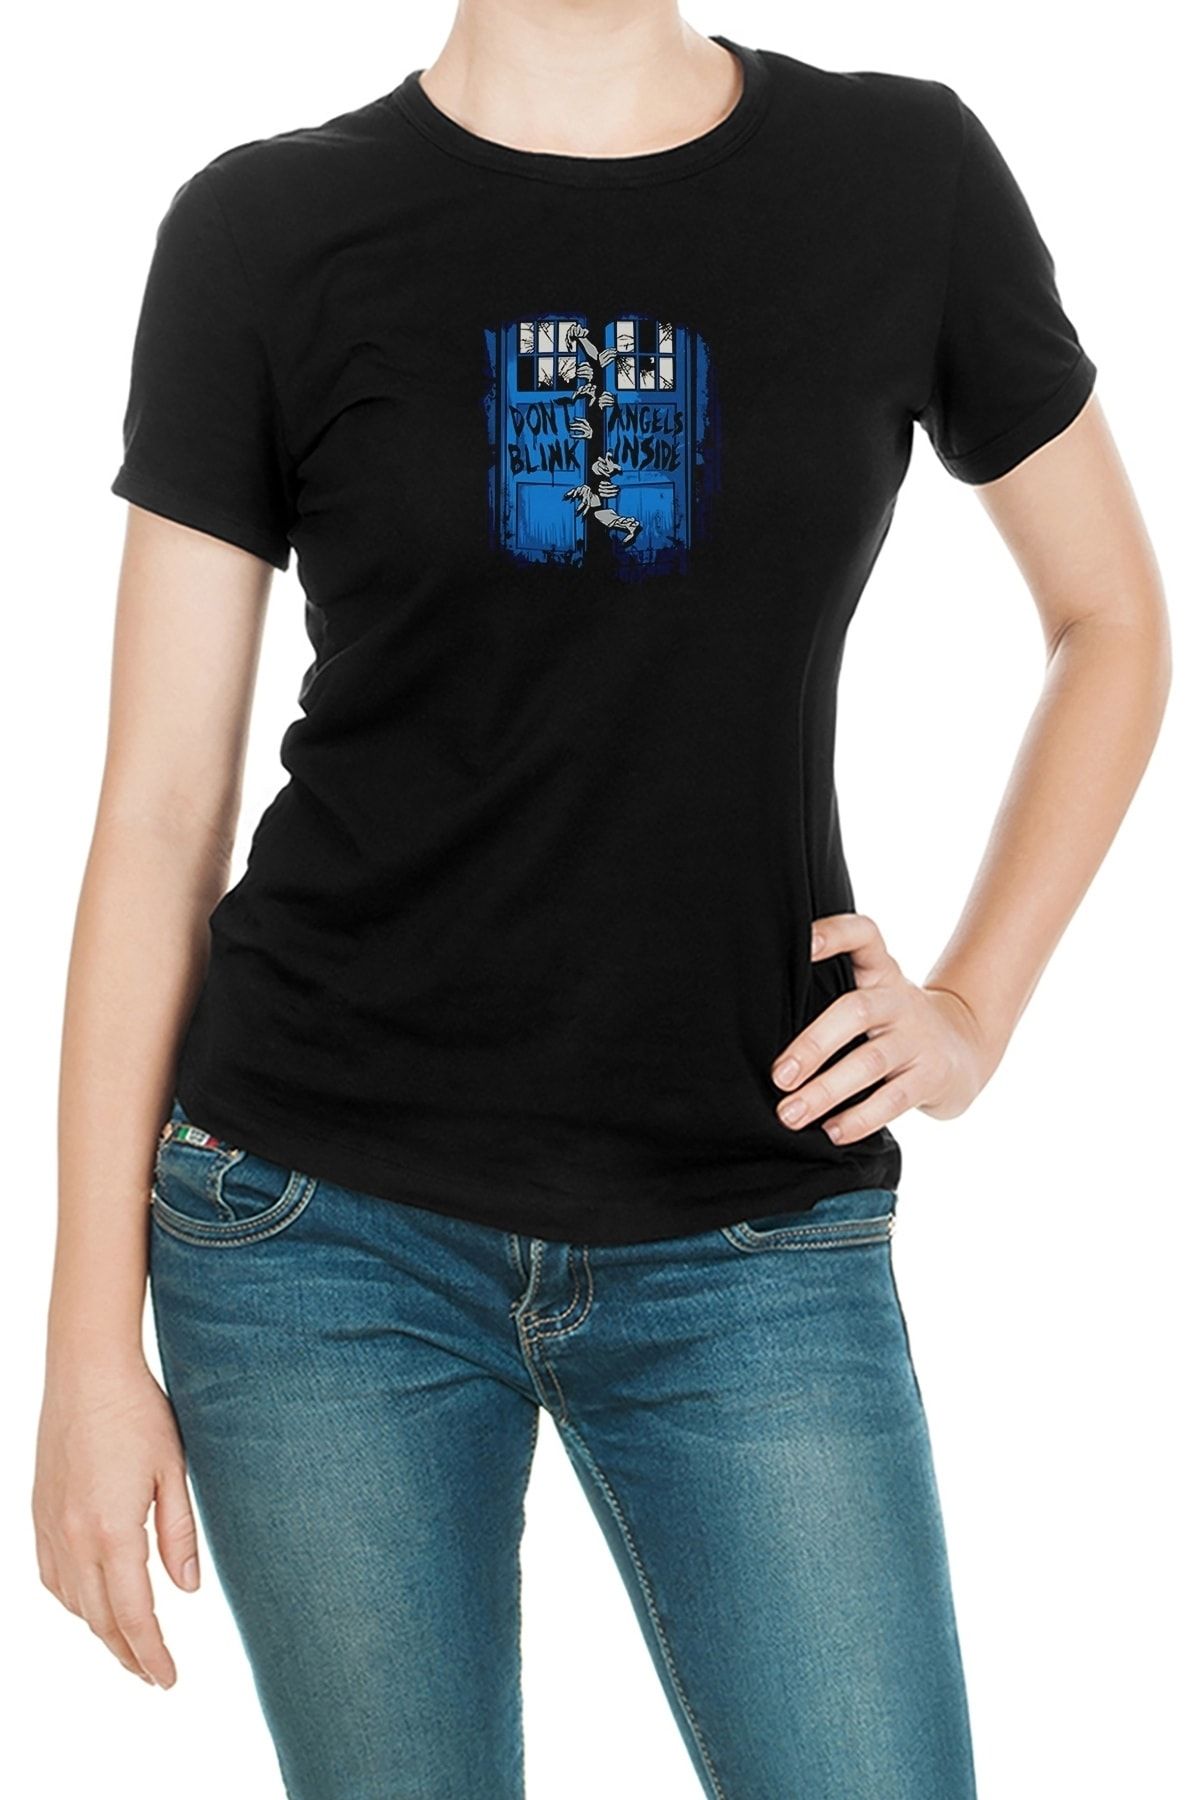 QIVI Doctor Who Fantasy Art Weeping Angels Baskılı Siyah Kadın Örme Tshirt T-shirt Tişört T Shirt